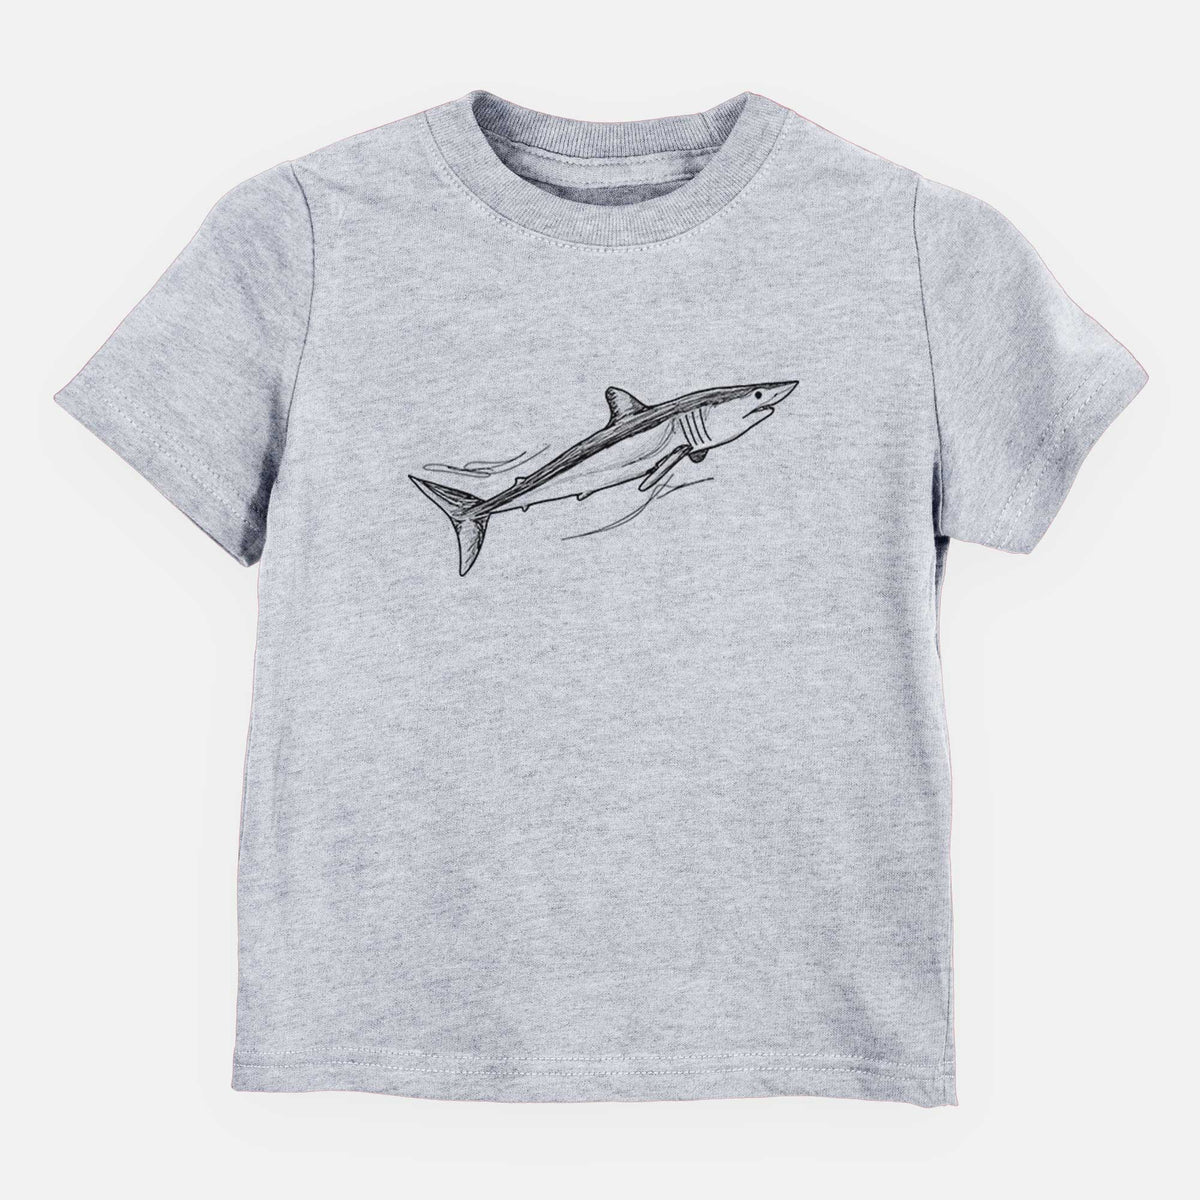 Mako Shark - Kids Shirt